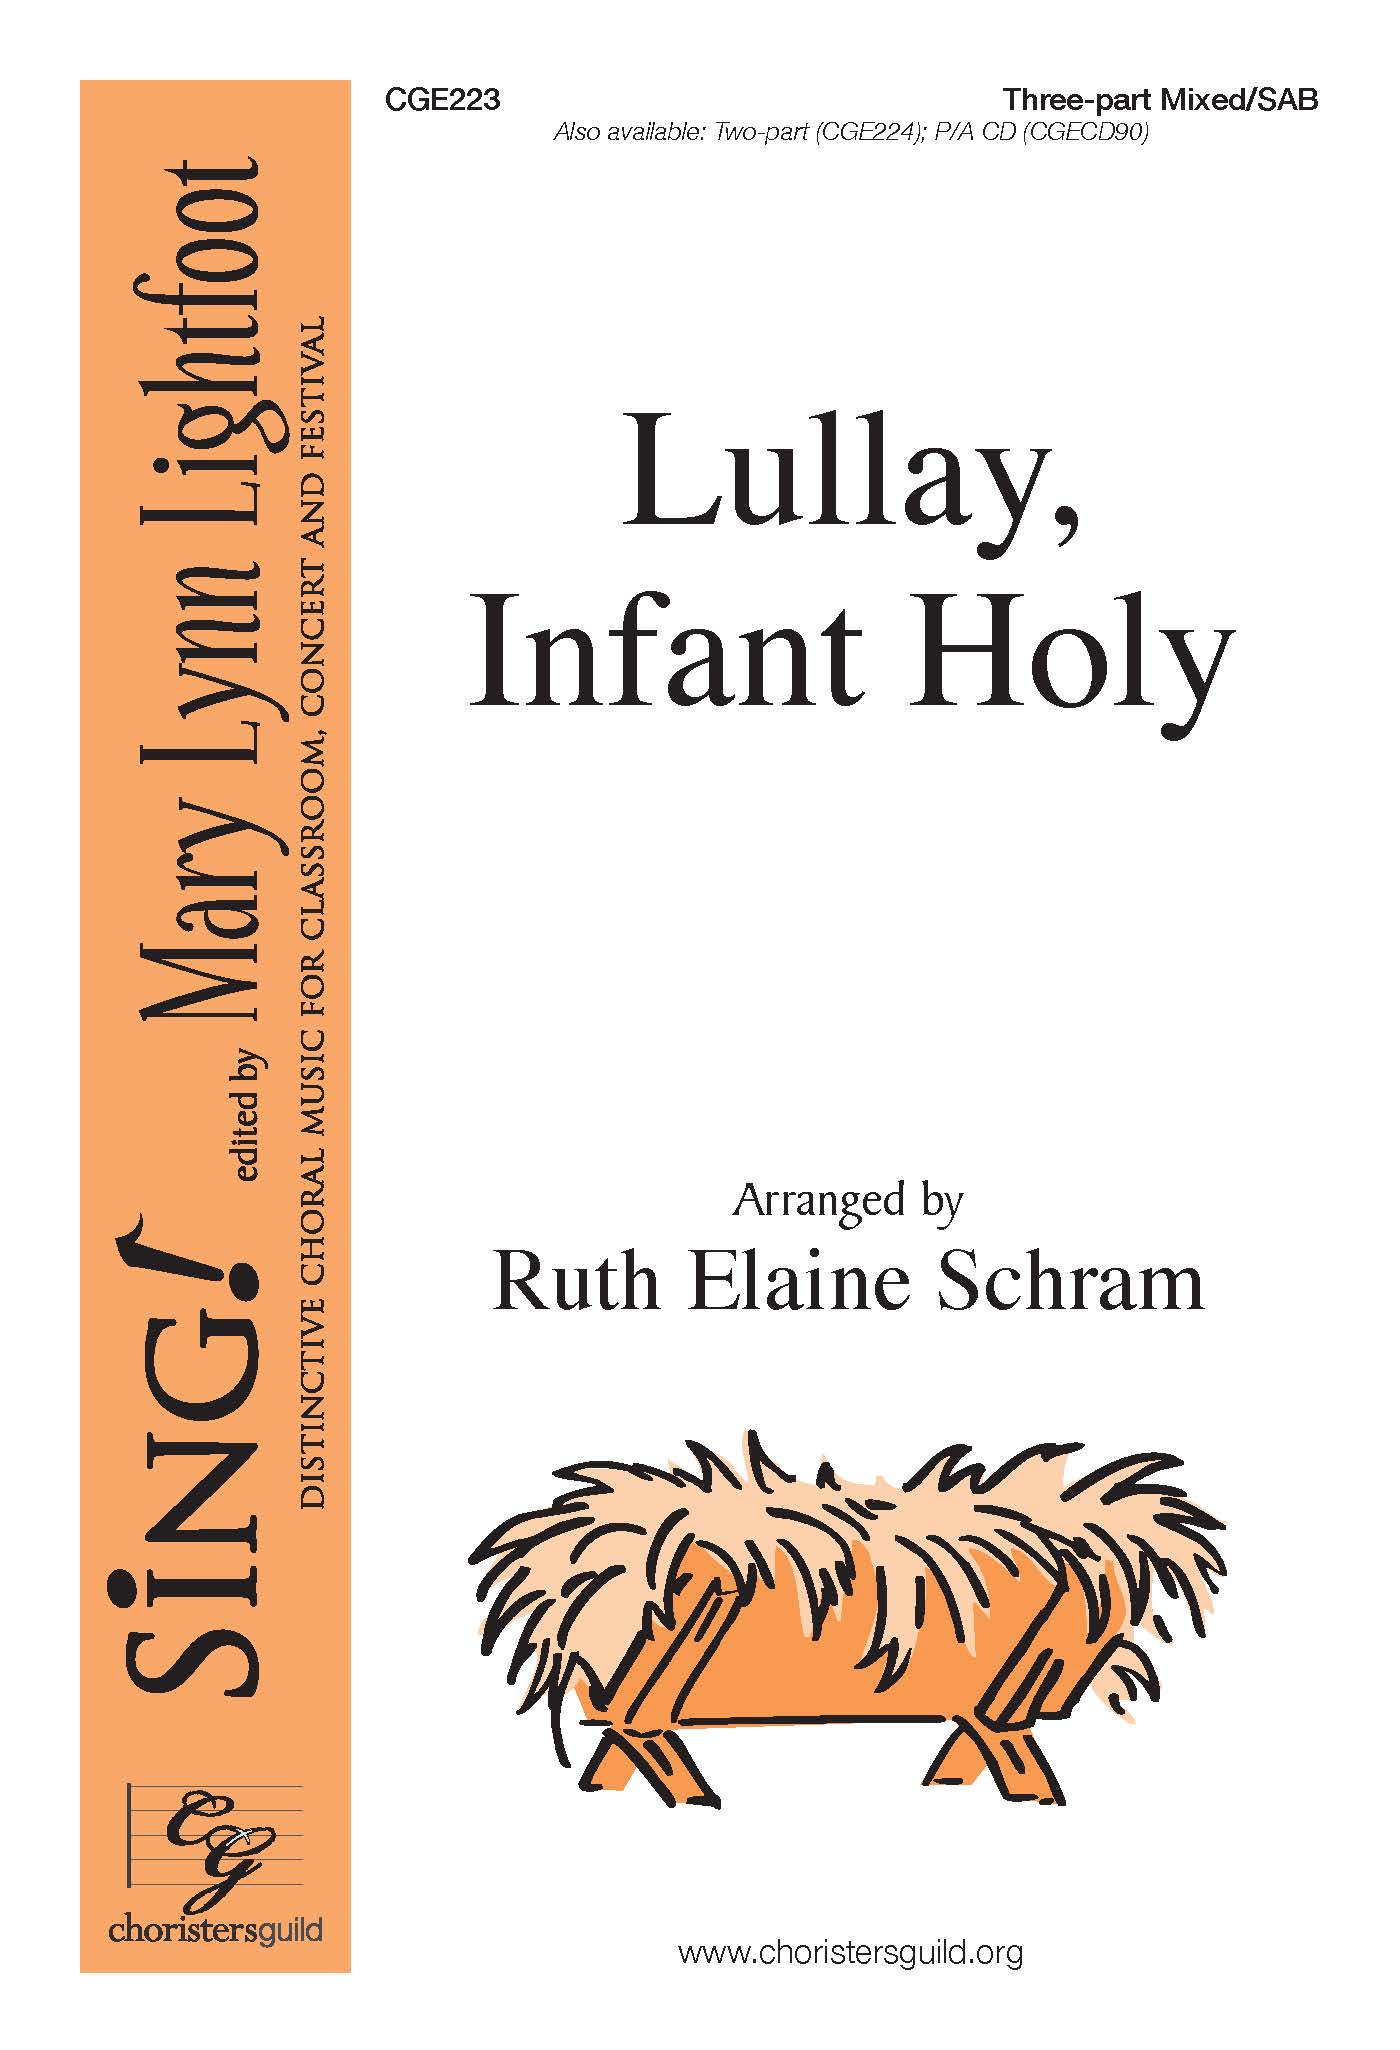 Lullay, Infant Holy Three-part Mixed/SAB